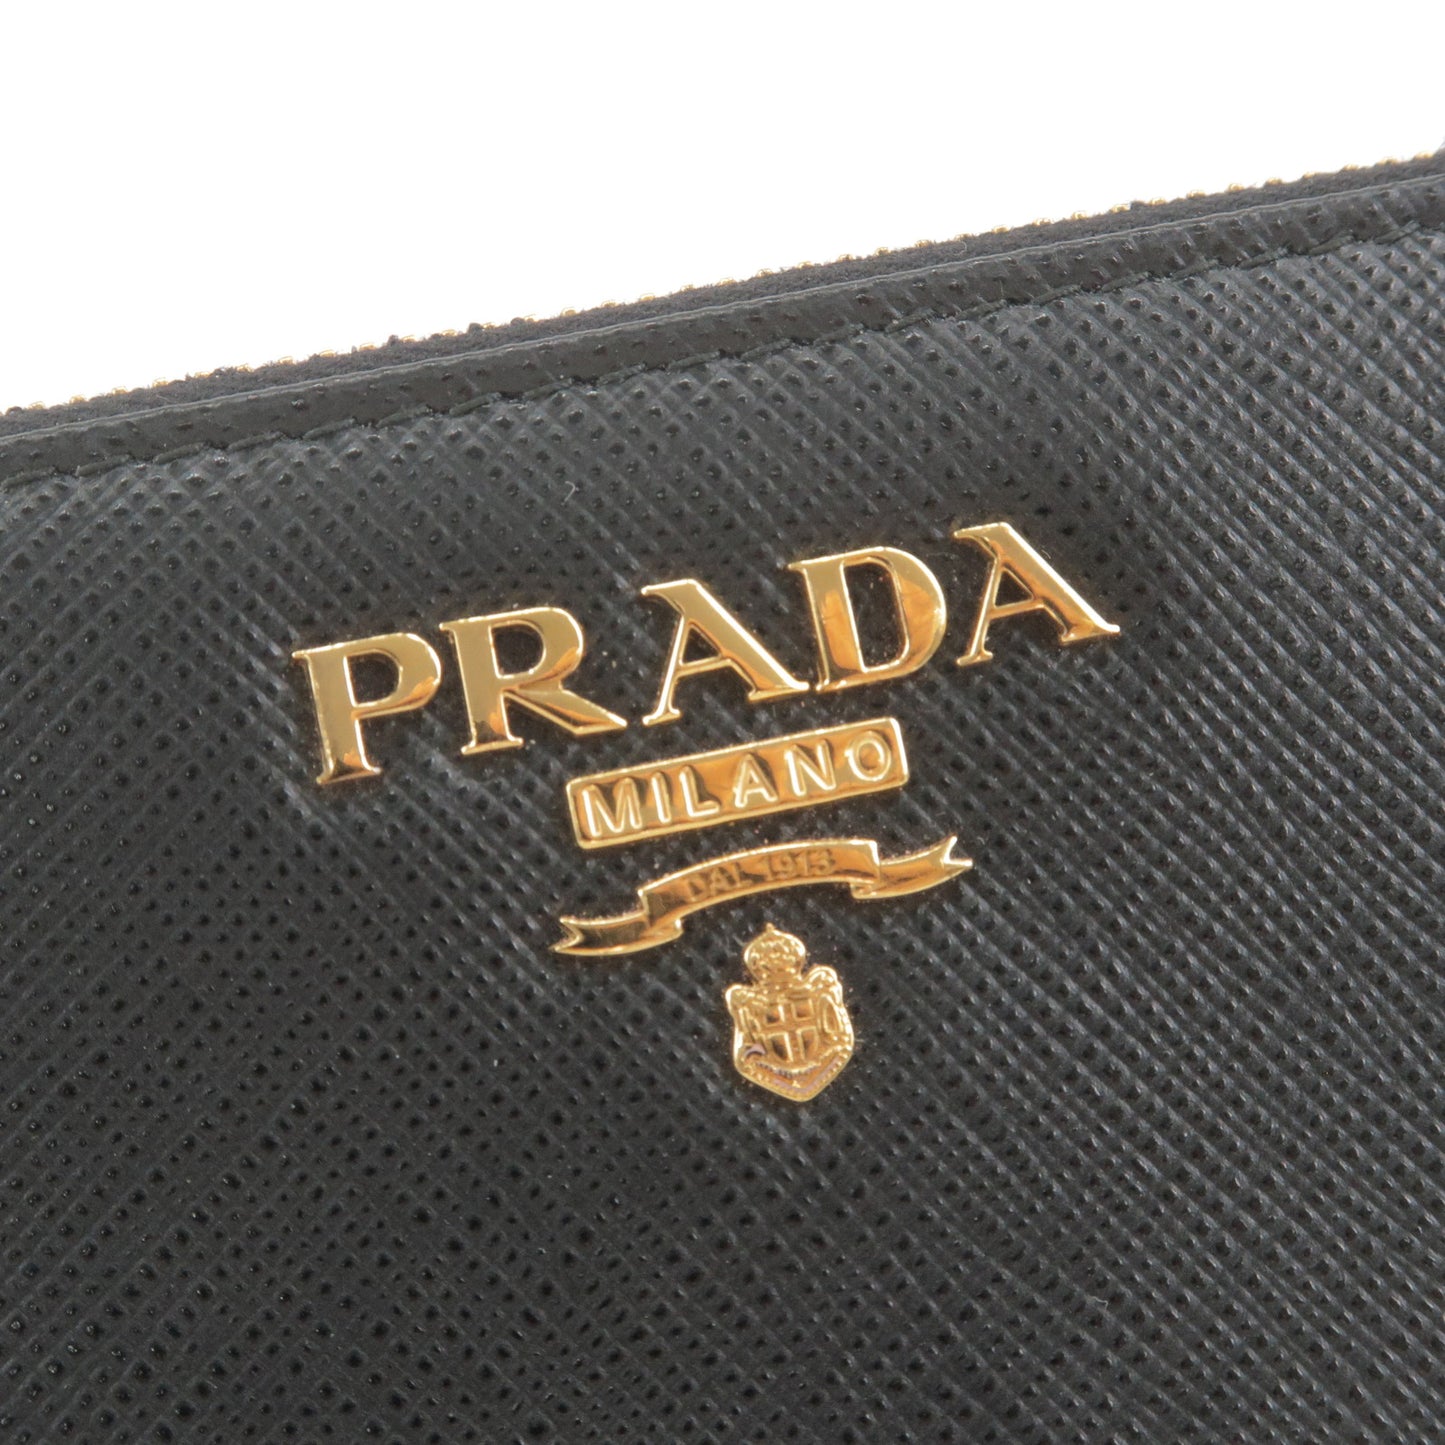 PRADA Leather Fragment Card Case Coin Case Black 1MC054